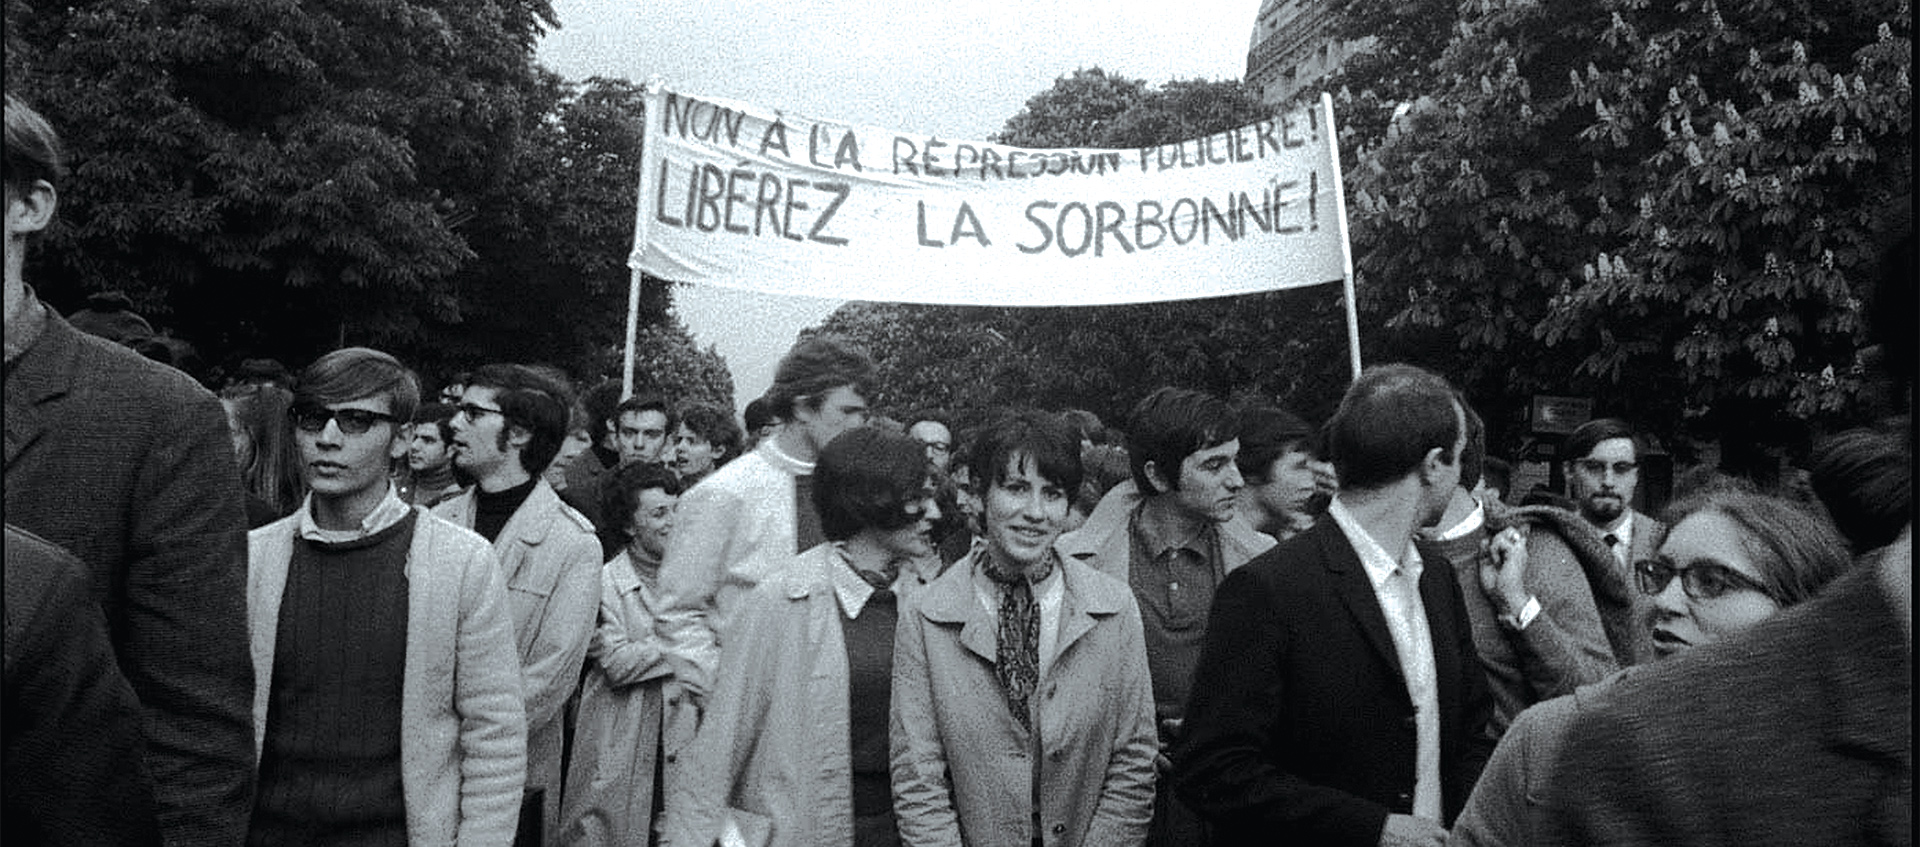 men and women demonstration, holding a banner